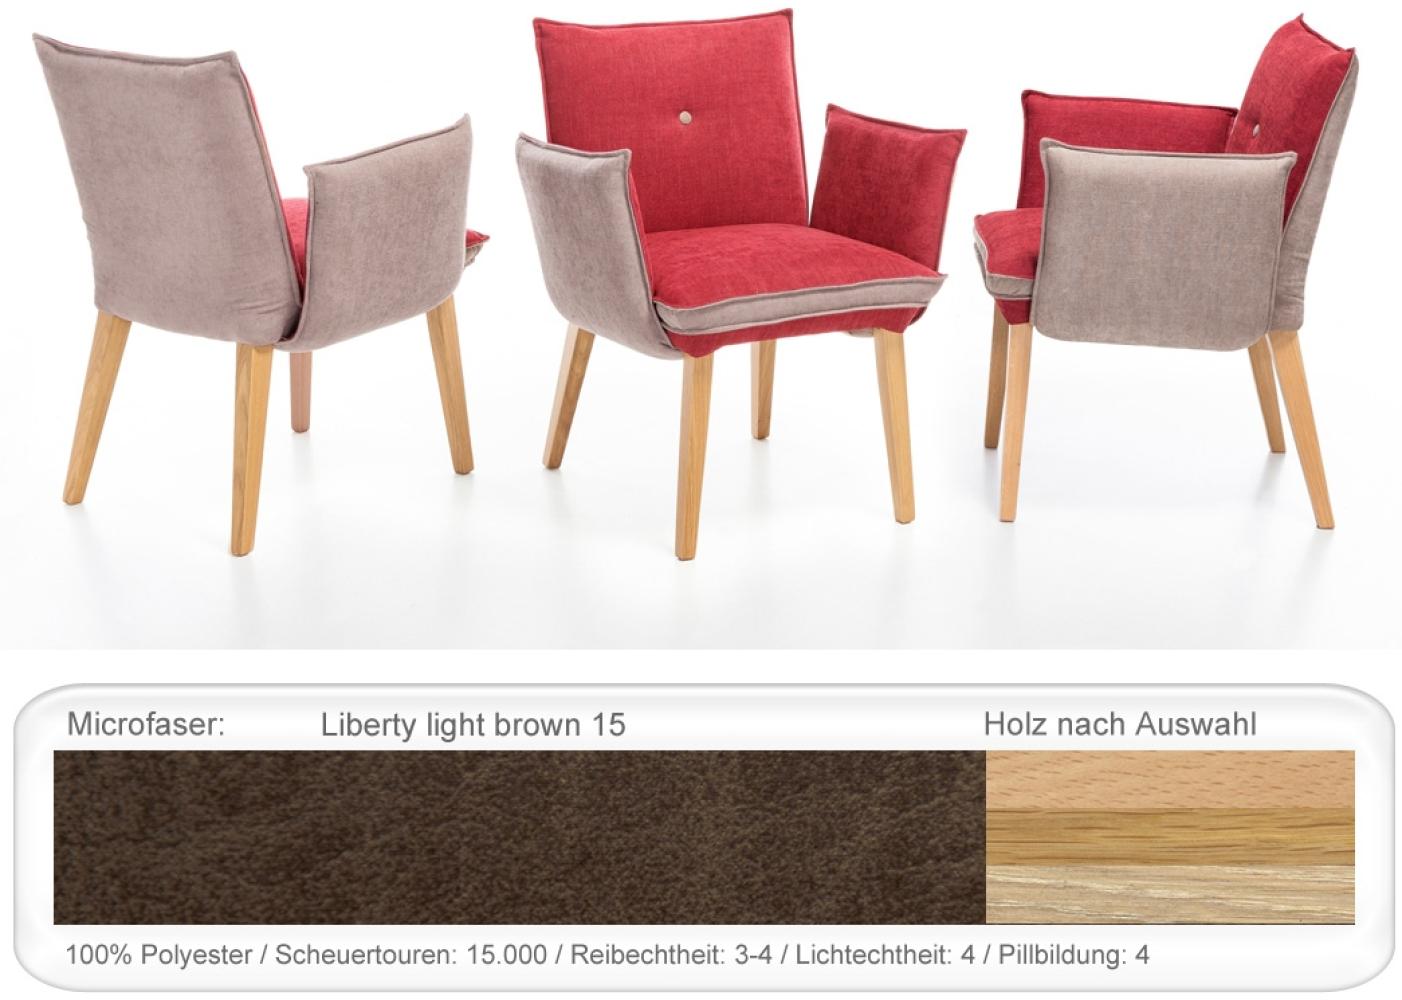 6x Sessel Gerit 1 Rücken mit Knopf Polstersessel Esszimmer Massivholz Eiche natur lackiert, Liberty light brown Bild 1